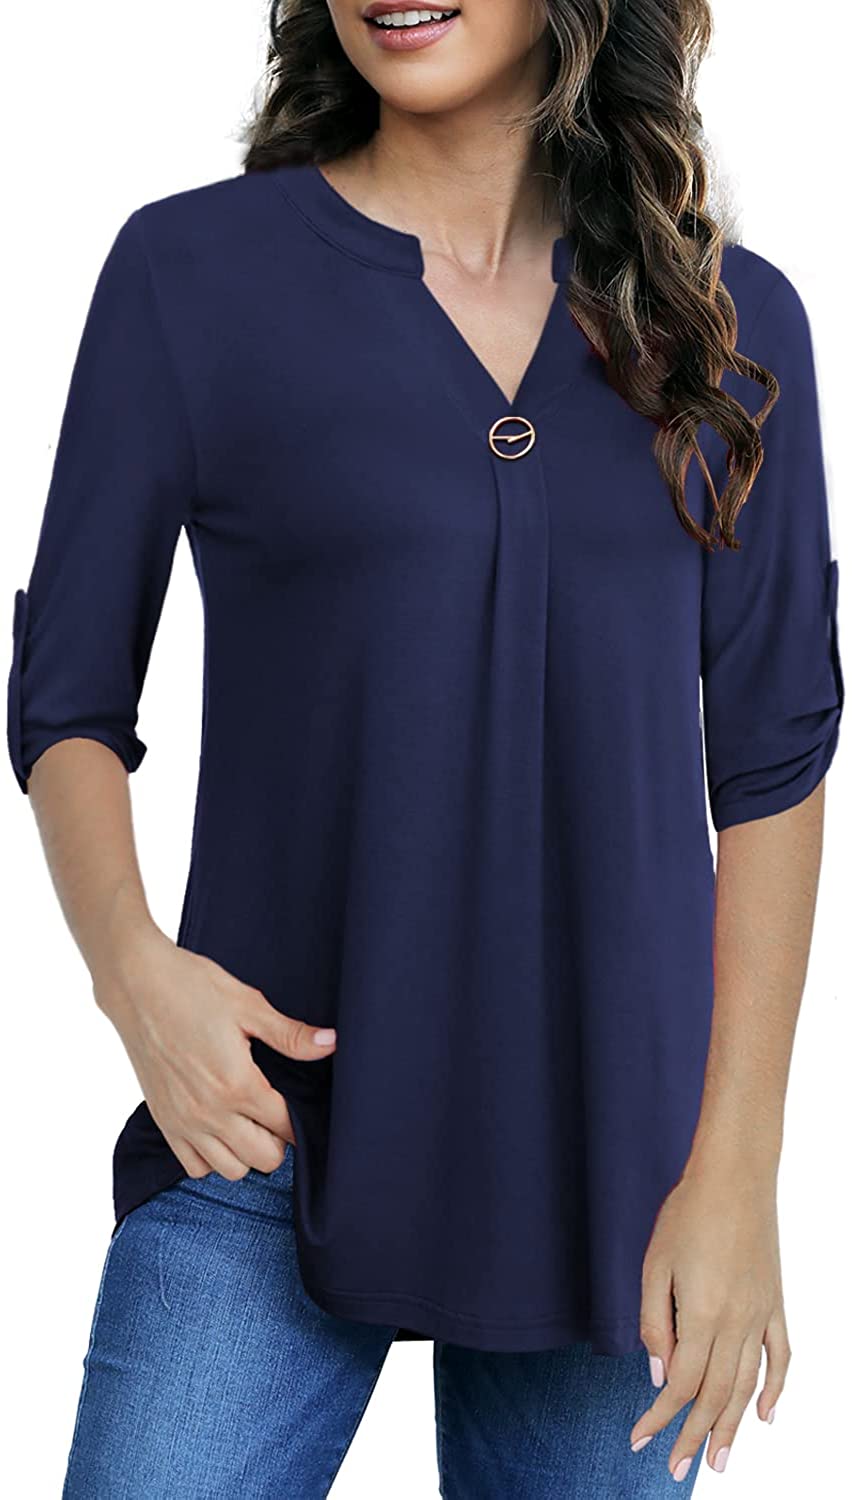 Casuashion Women's Tops 3/4 Sleeve Tunic top Casual Plus Size